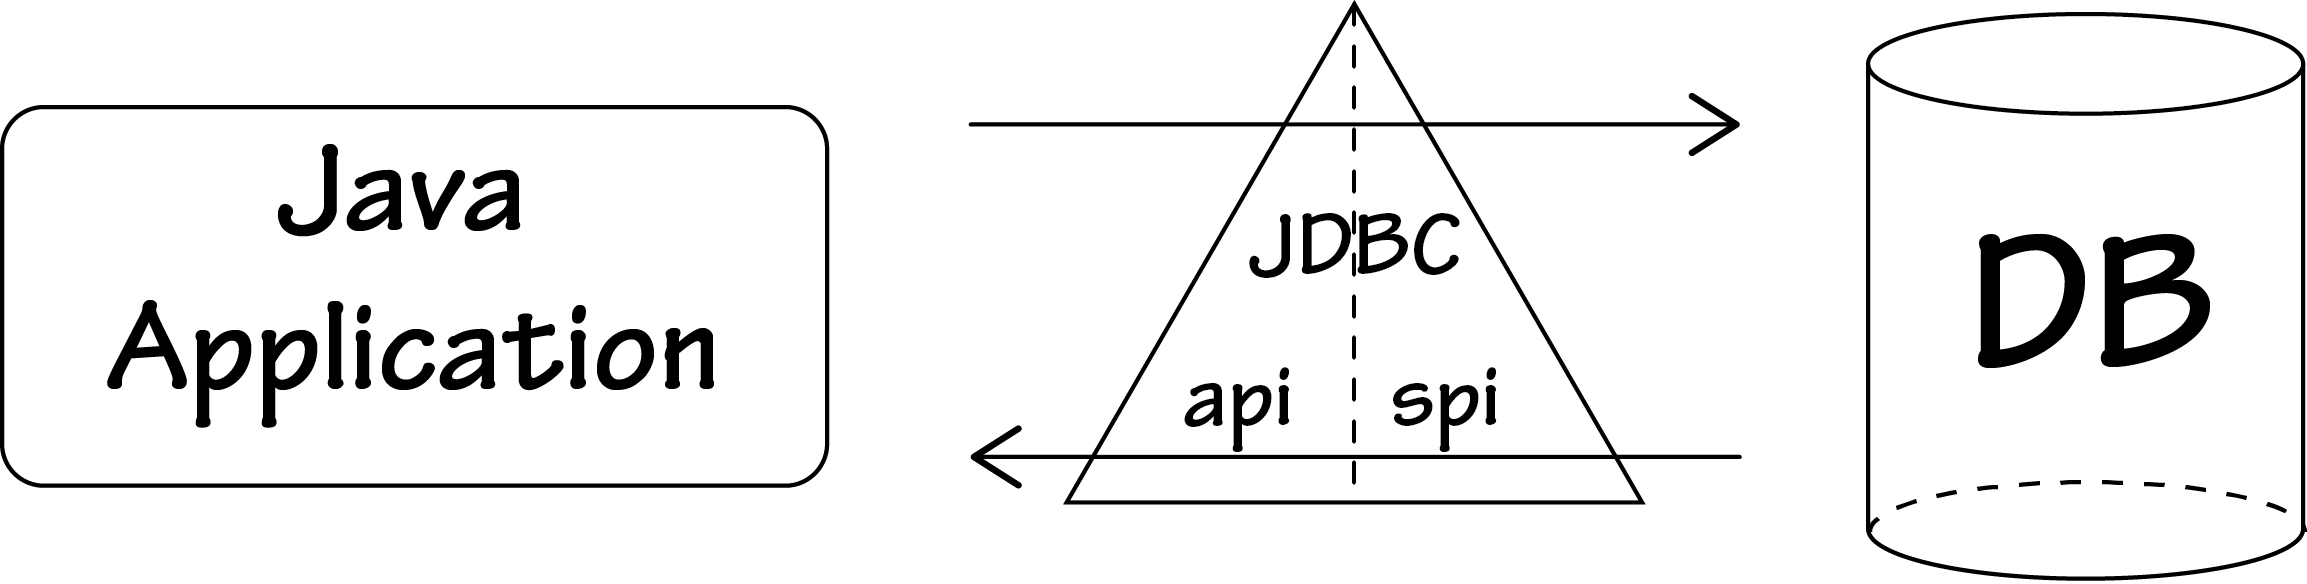 jdbc's position 2